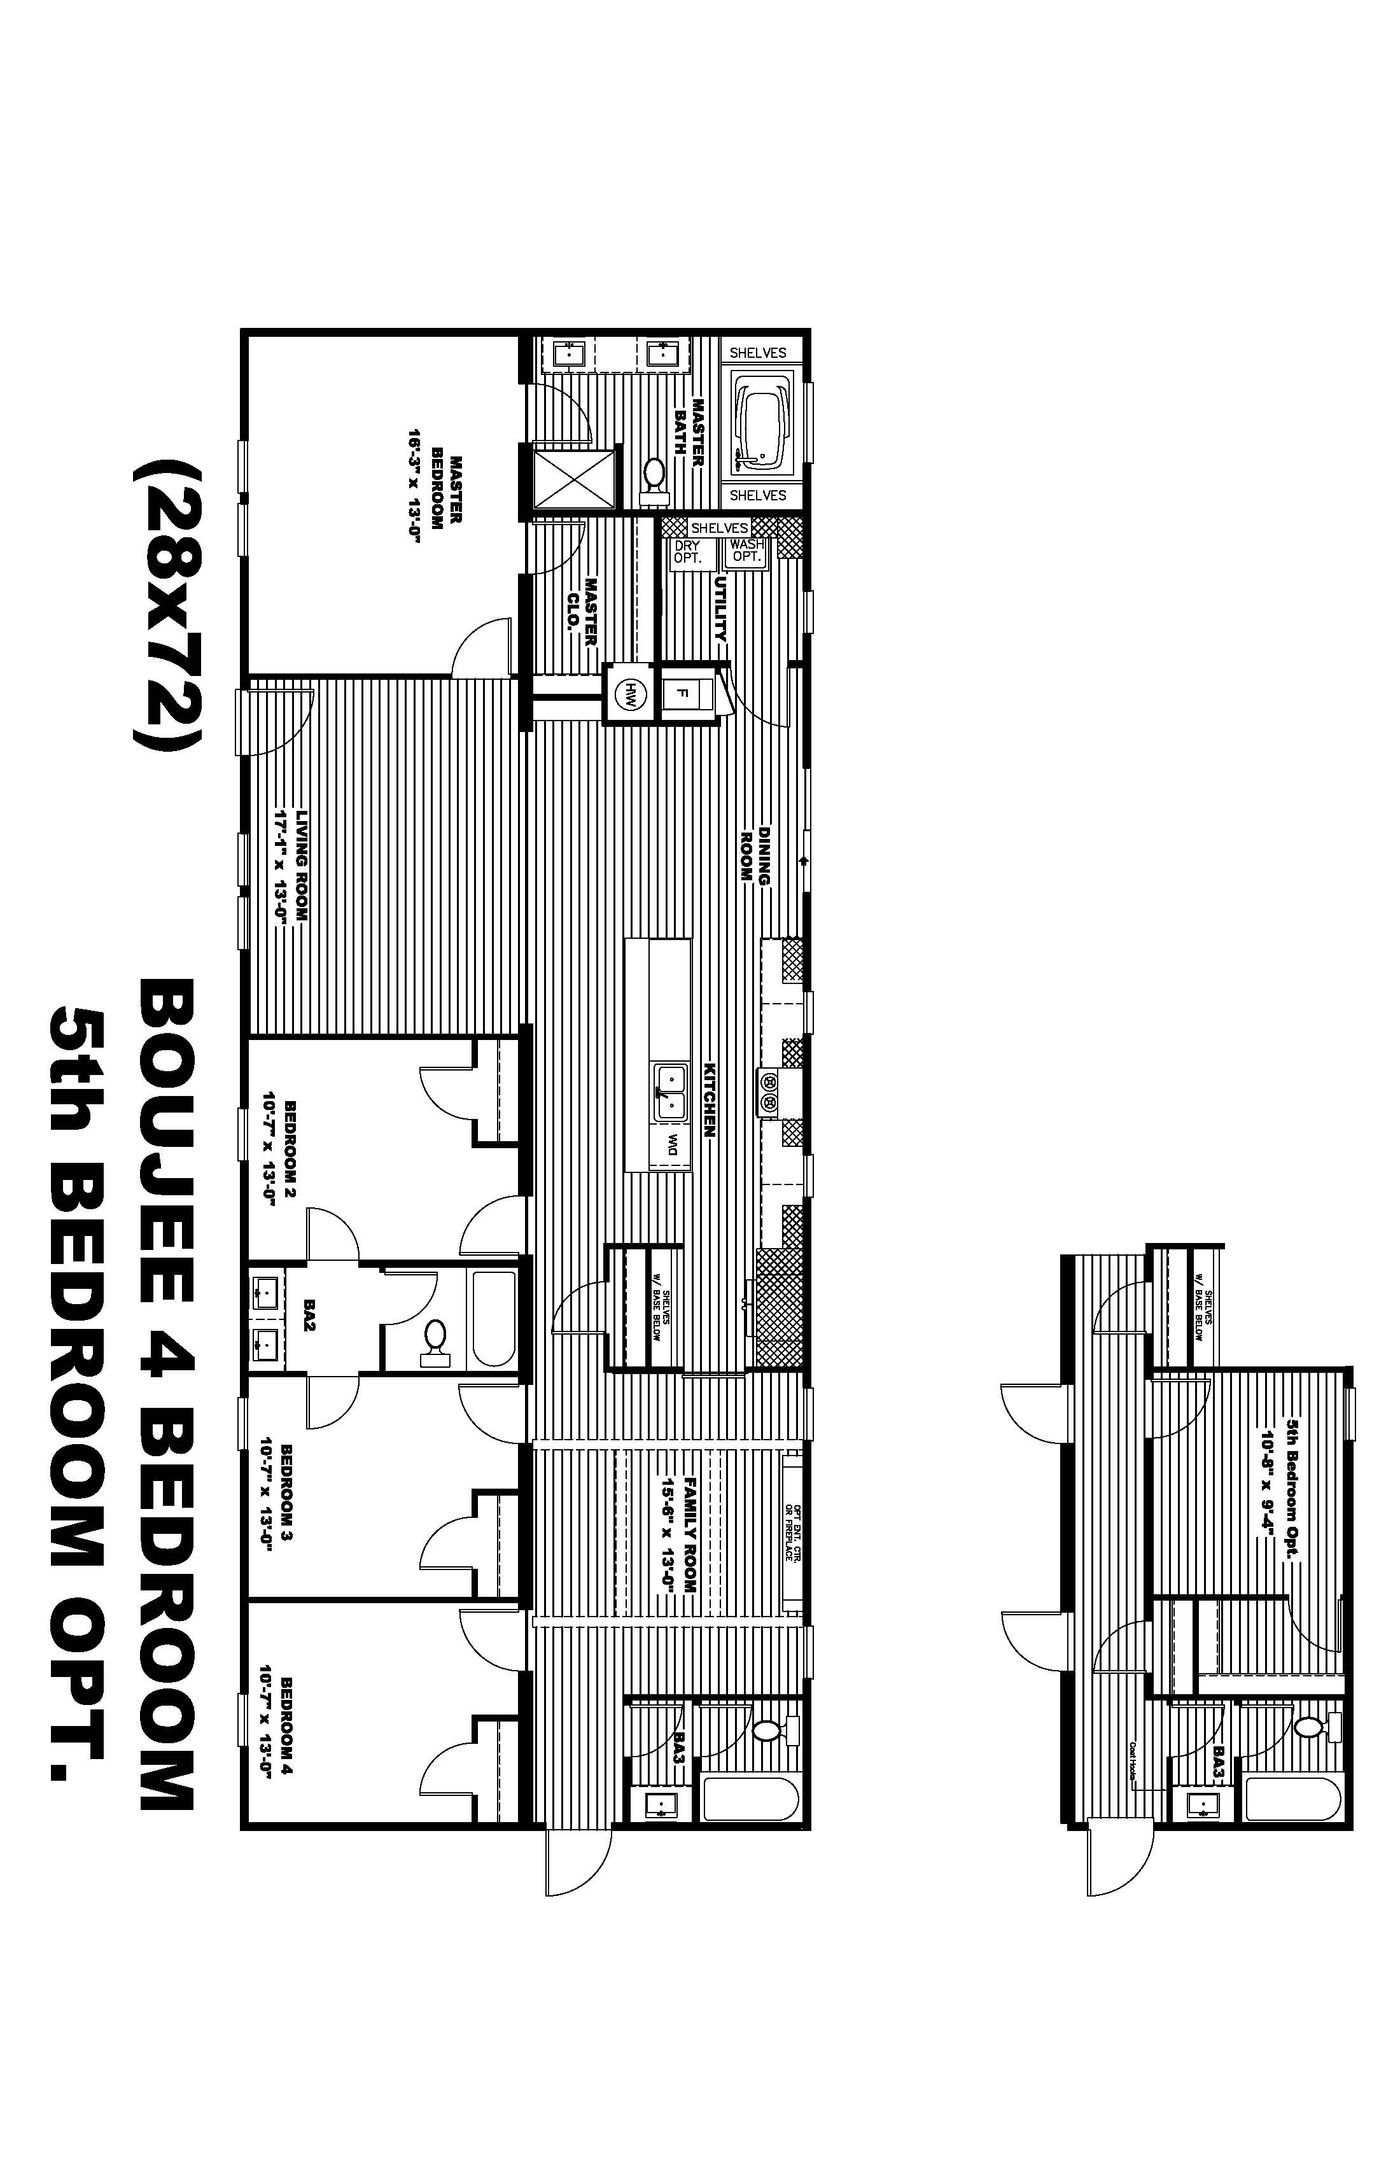 The Boujee XL Floorplan